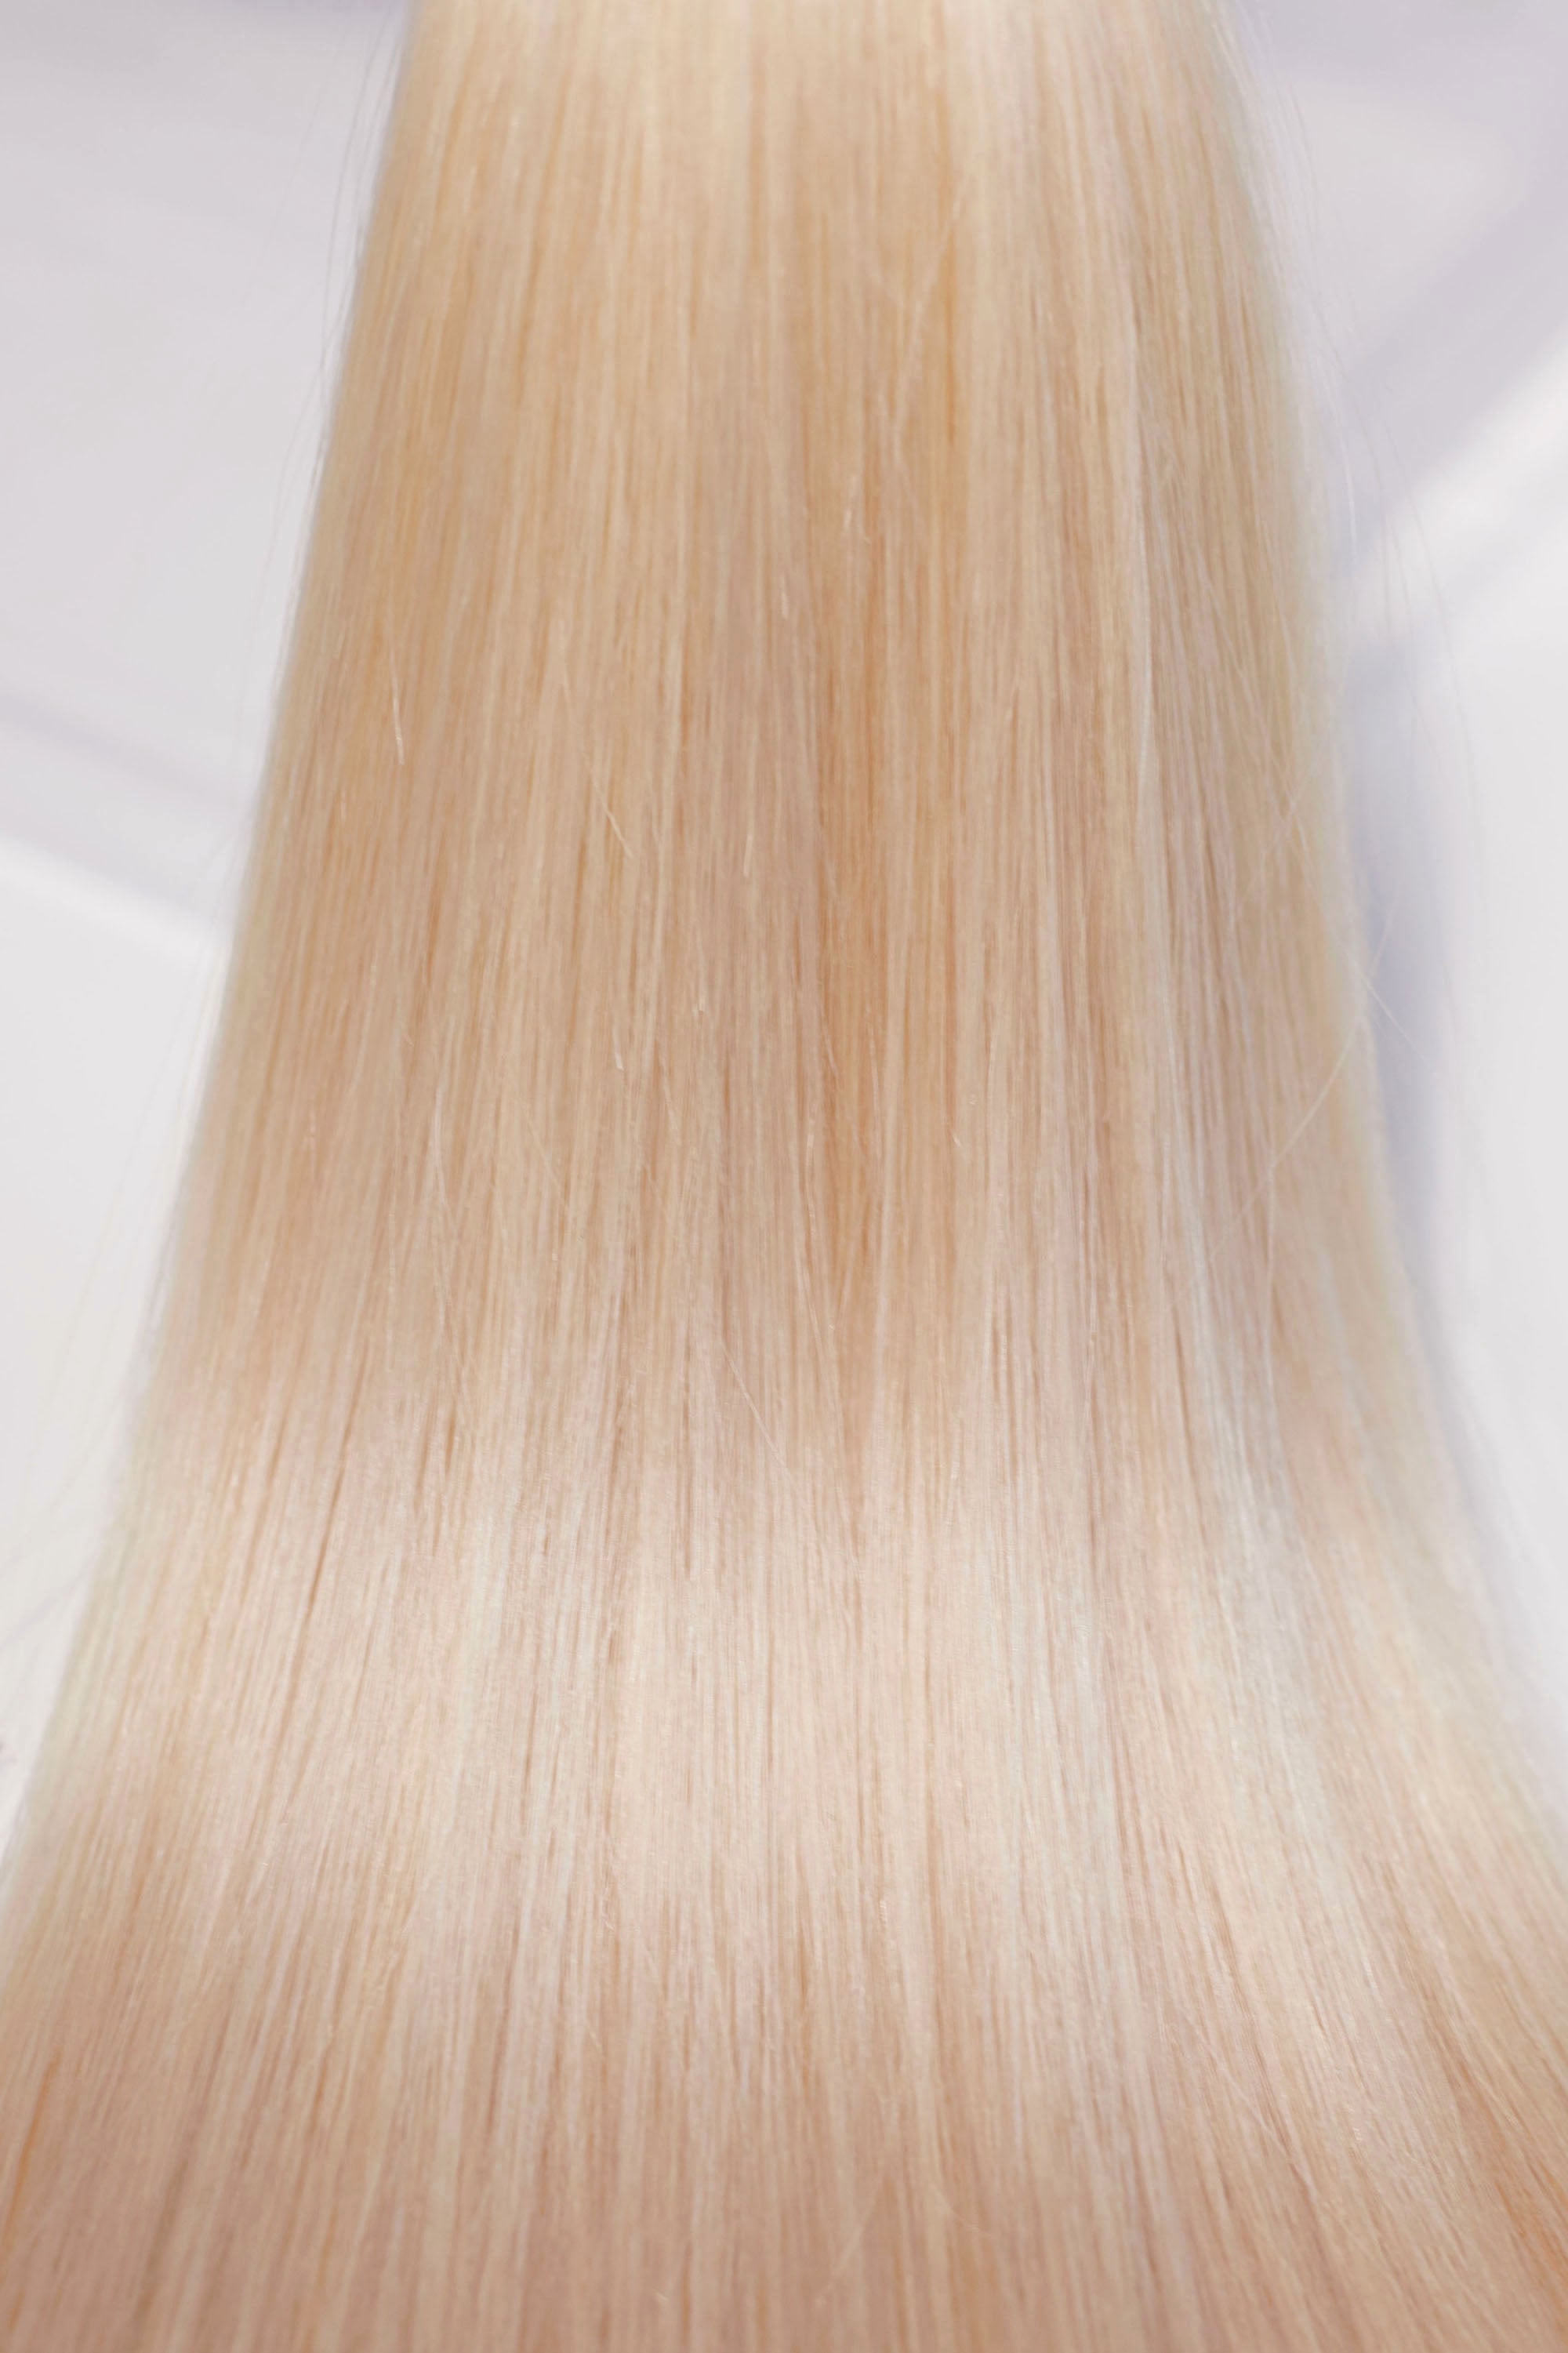 Behair professional Keratin Tip "Premium" 18" (45cm) Natural Straight Platinum Blond #60 - 25g (Micro - 0.5g each pcs) hair extensions